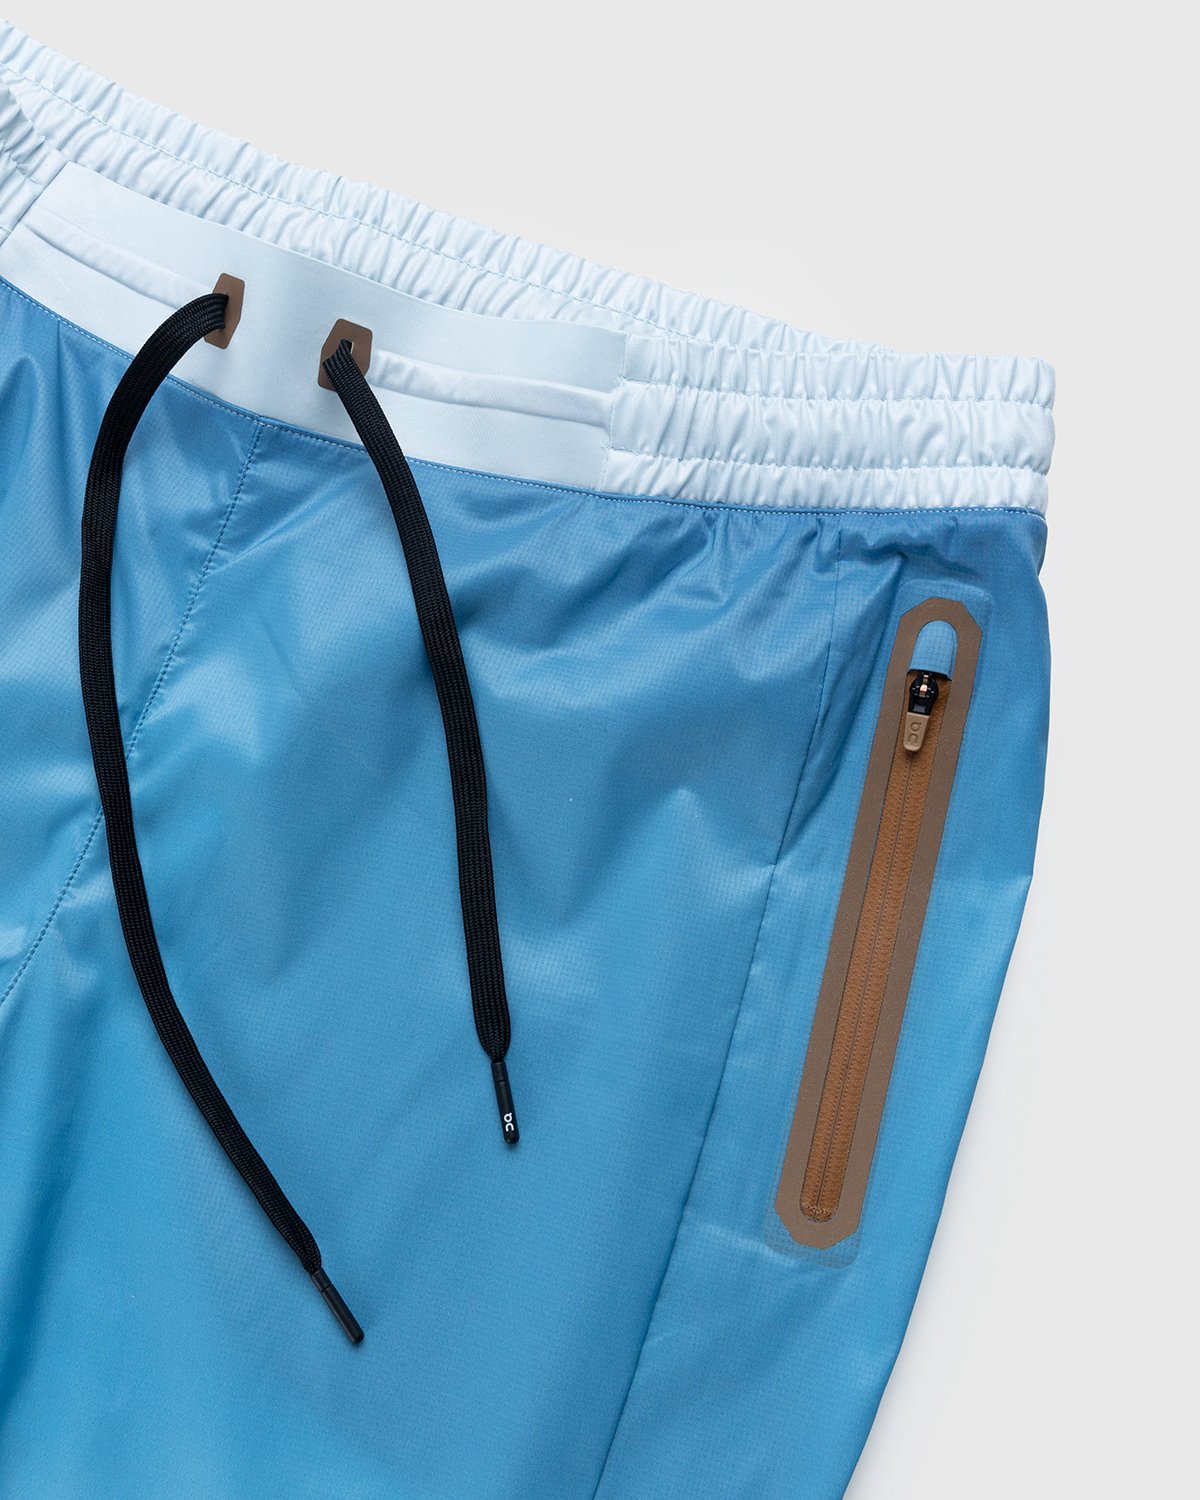 Loewe x On - Men's Technical Running Pants Gradient Grey - Clothing - Blue - Image 5